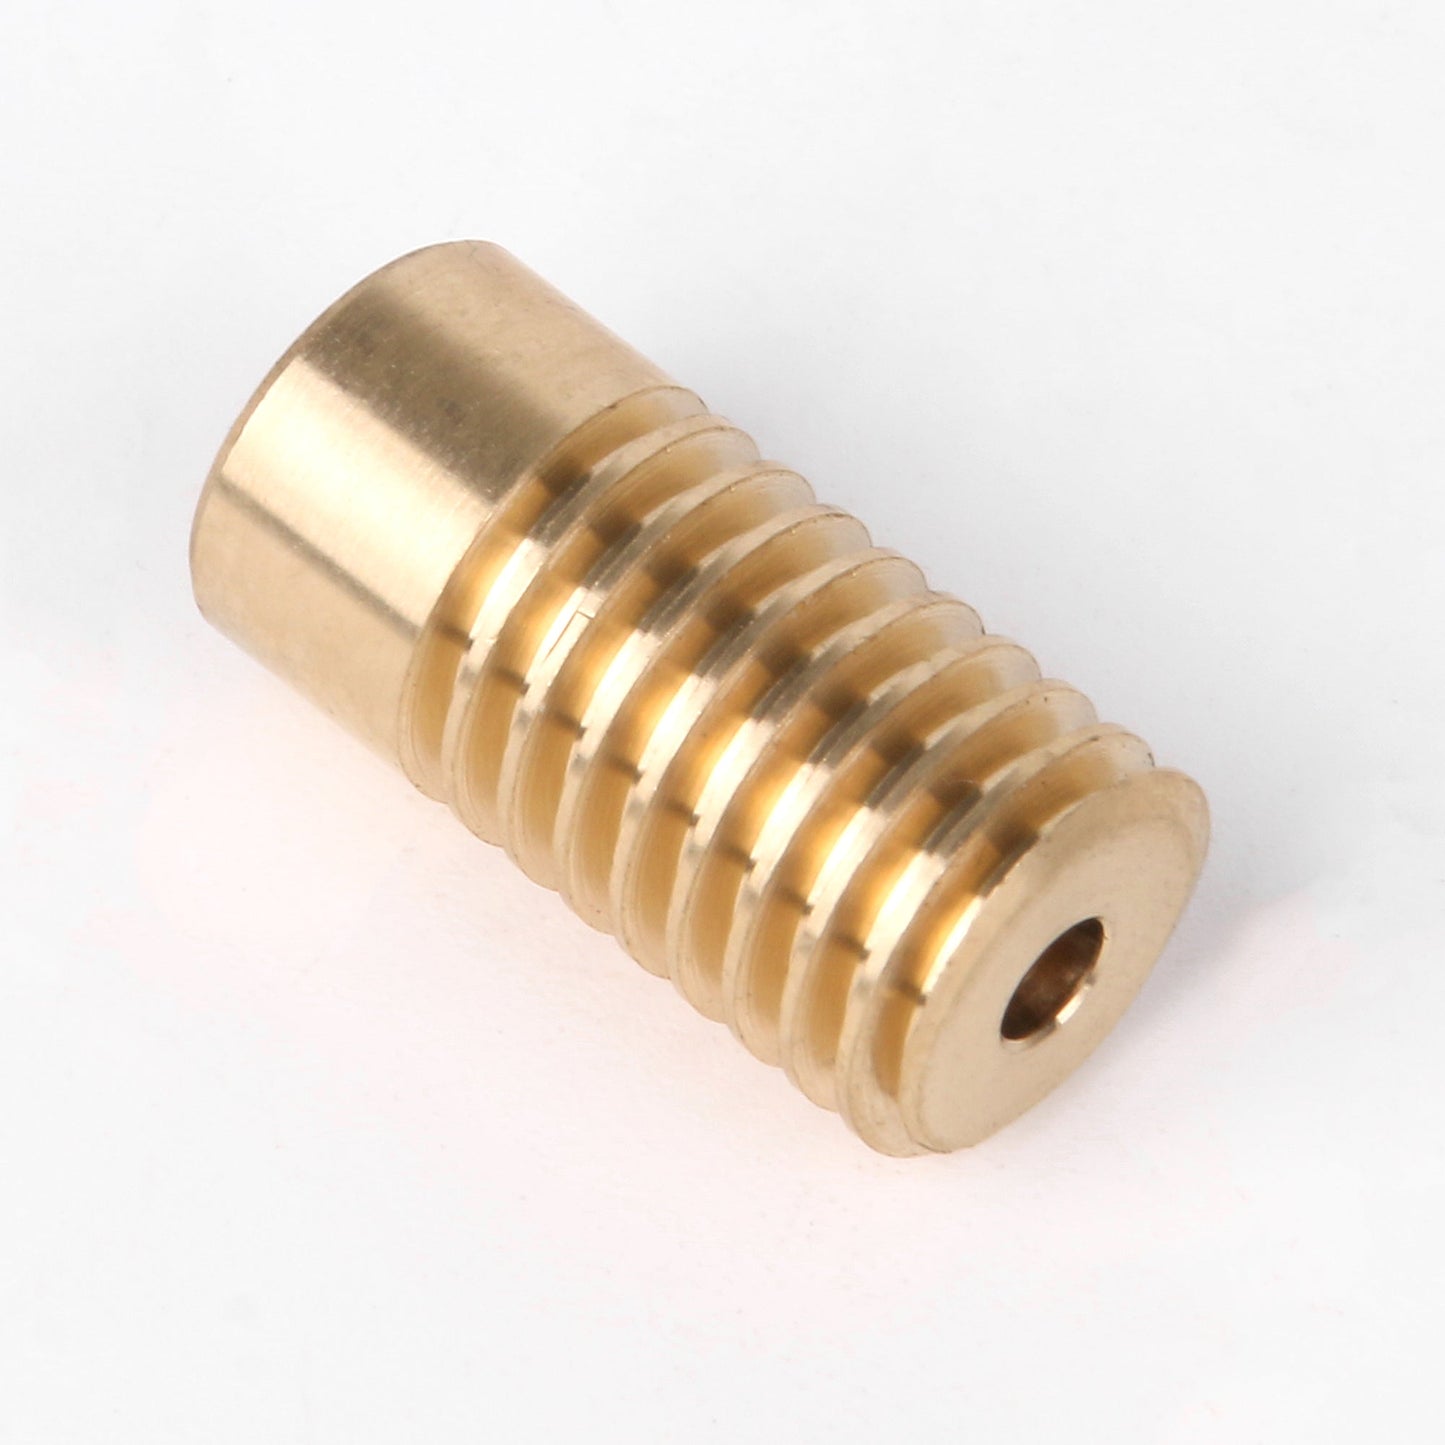 BQLZR 30T 0.5 Modulus Industry Brass Gear Wheel 4mm Hole Dia Shaft Kit w/ Screw 1:30